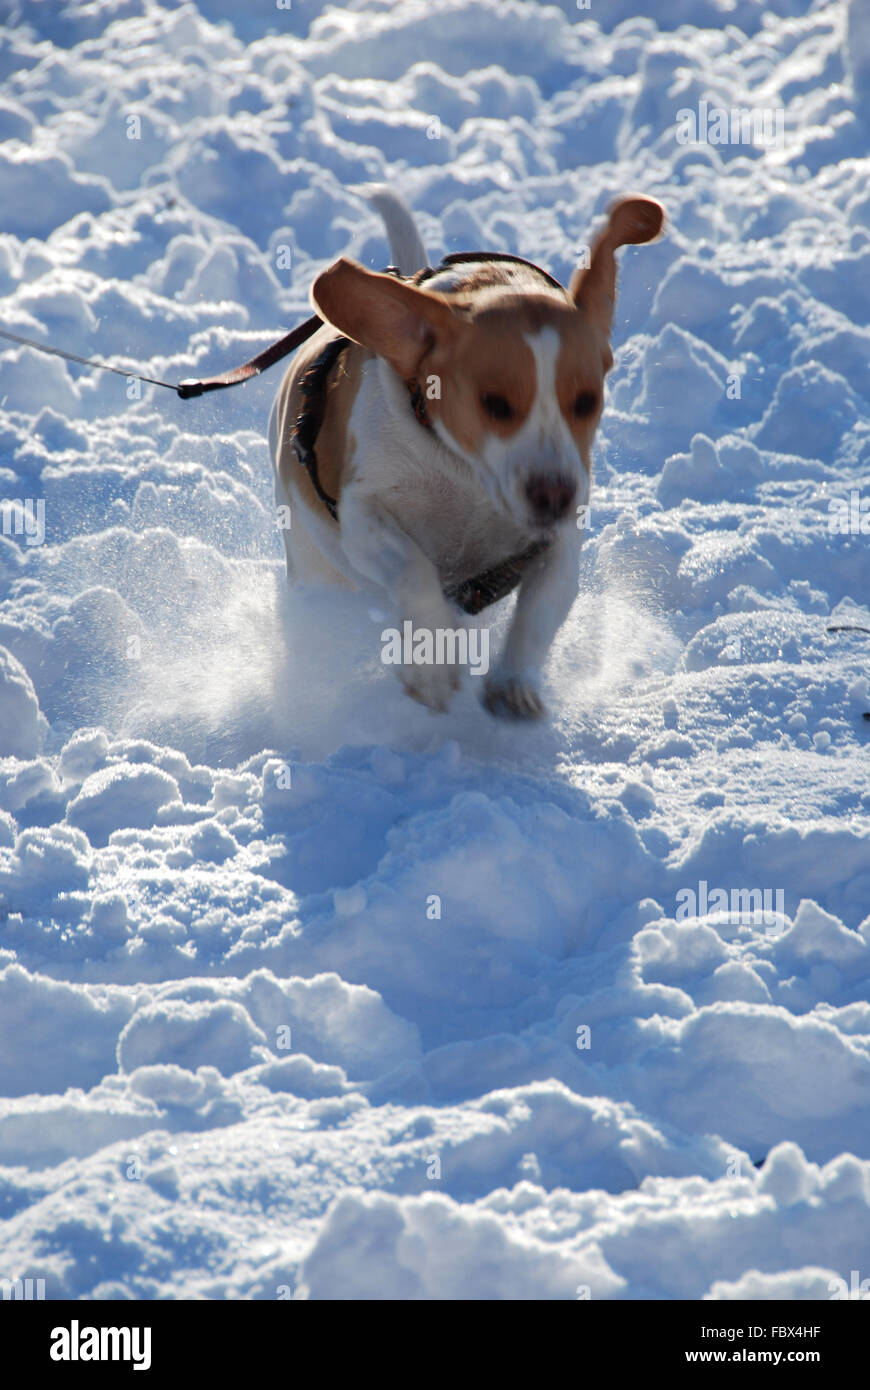 Dog in full speed enjoying the snow Stock Photo